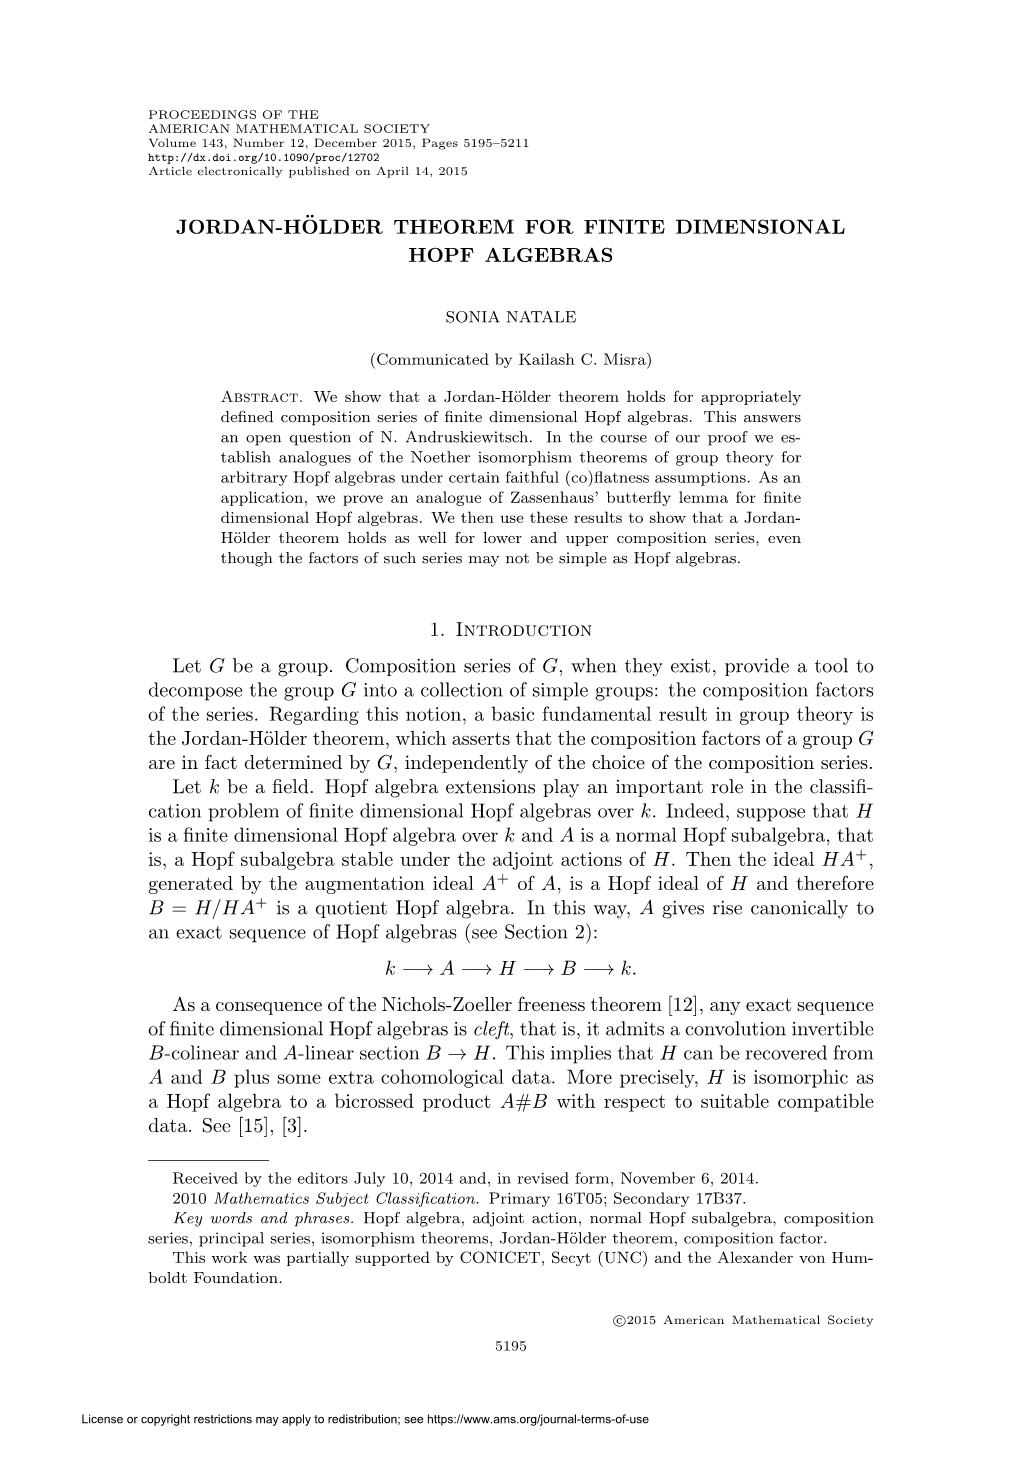 Jordan-Hölder Theorem for Finite Dimensional Hopf Algebras